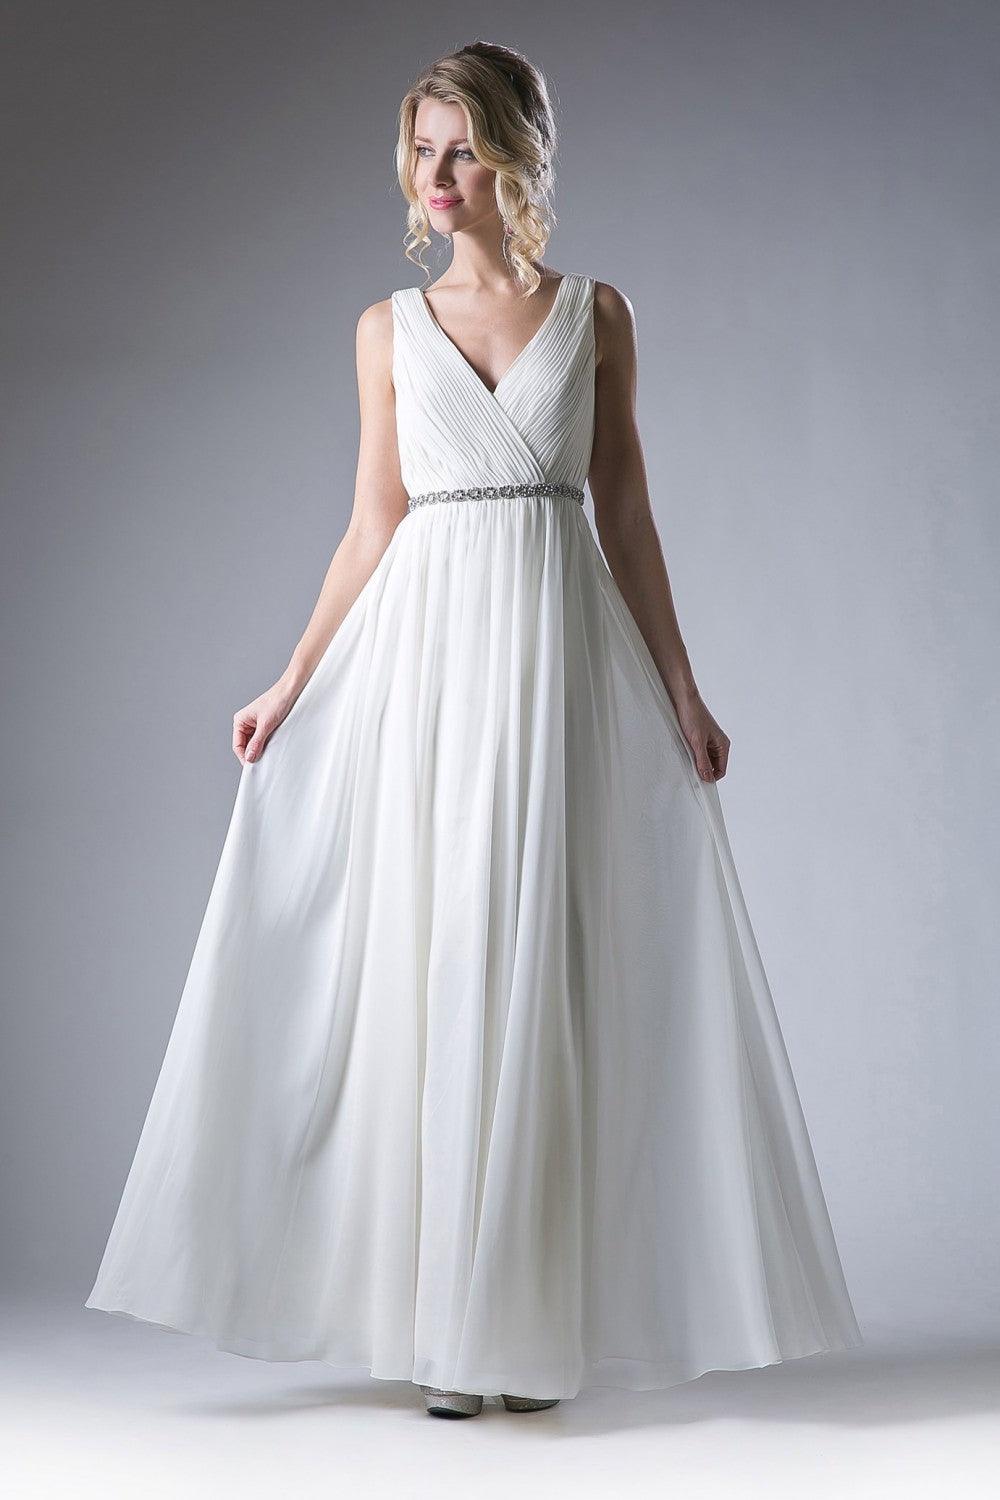 Formal Long Prom Dress Sleeveless - The Dress Outlet Cinderella Divine